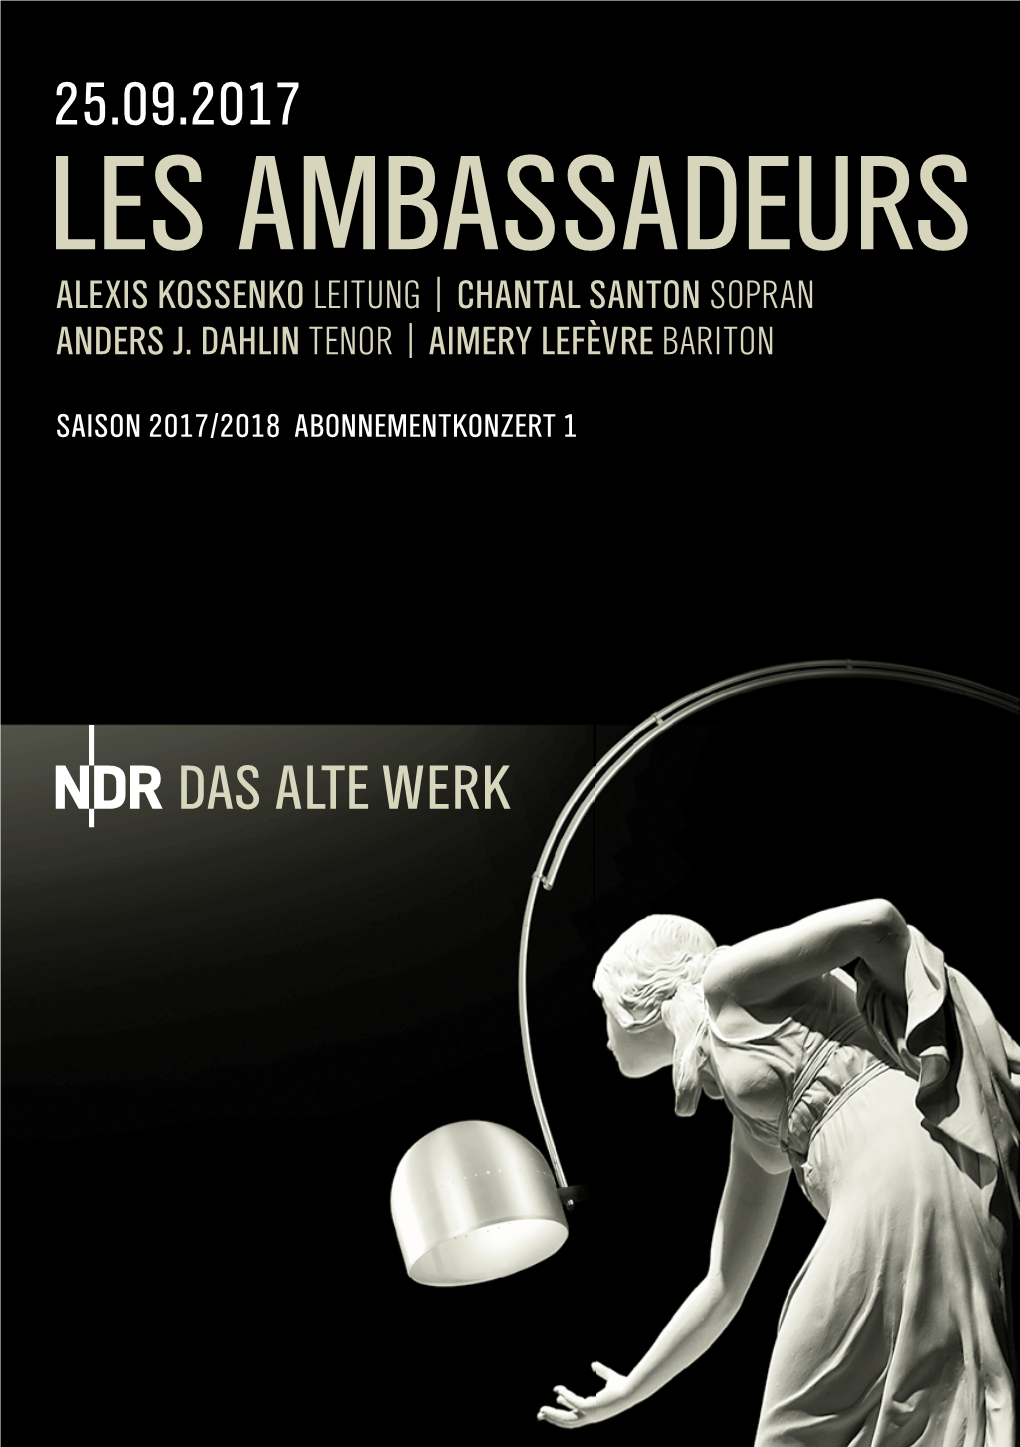 Les Ambassadeurs Alexis Kossenko Leitung | Chantal Santon Sopran Anders J